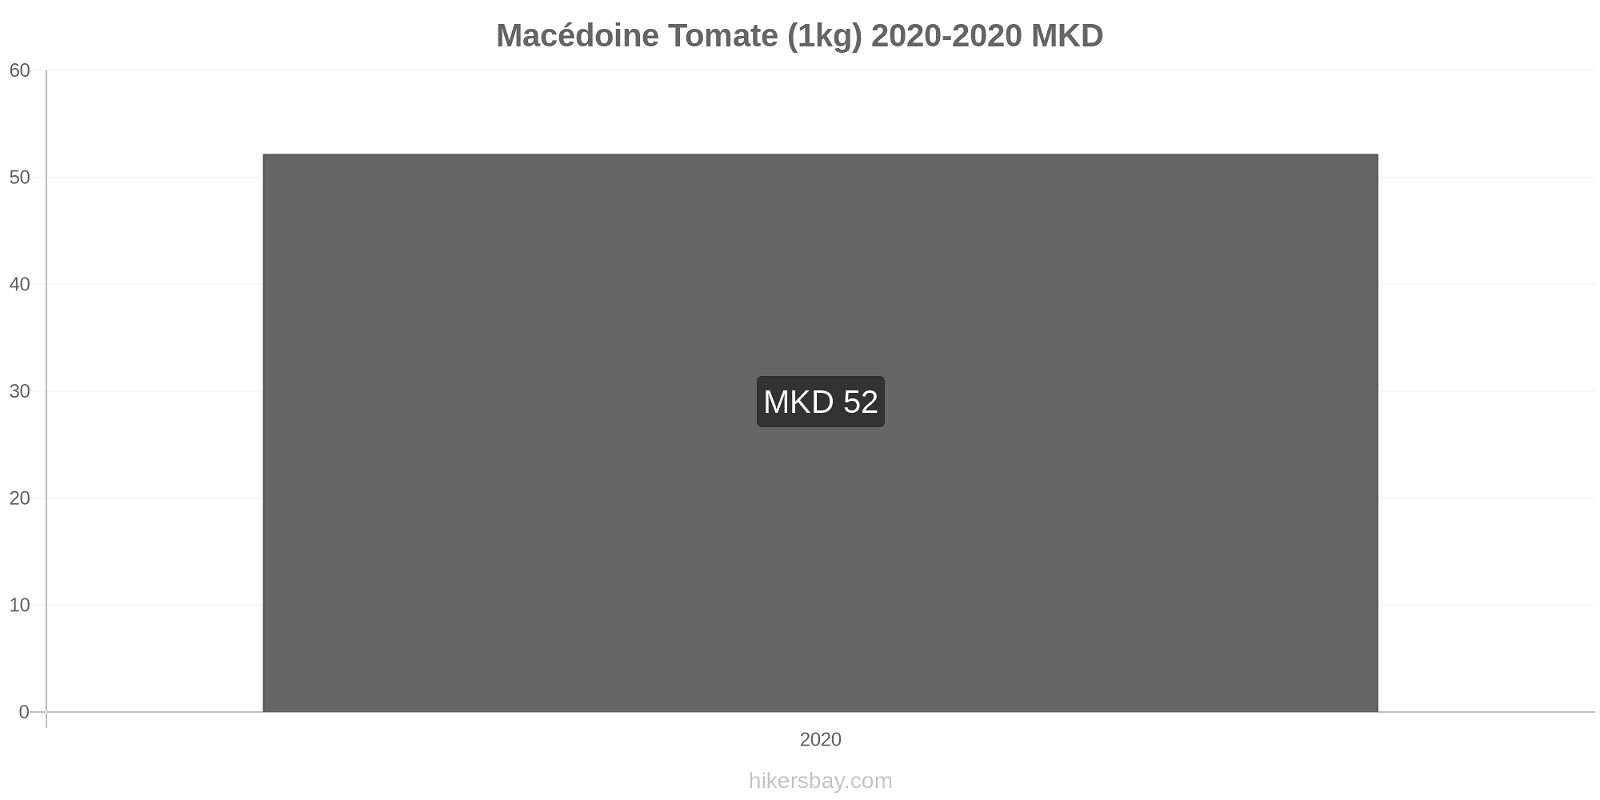 Macédoine changements de prix Tomate (1kg) hikersbay.com